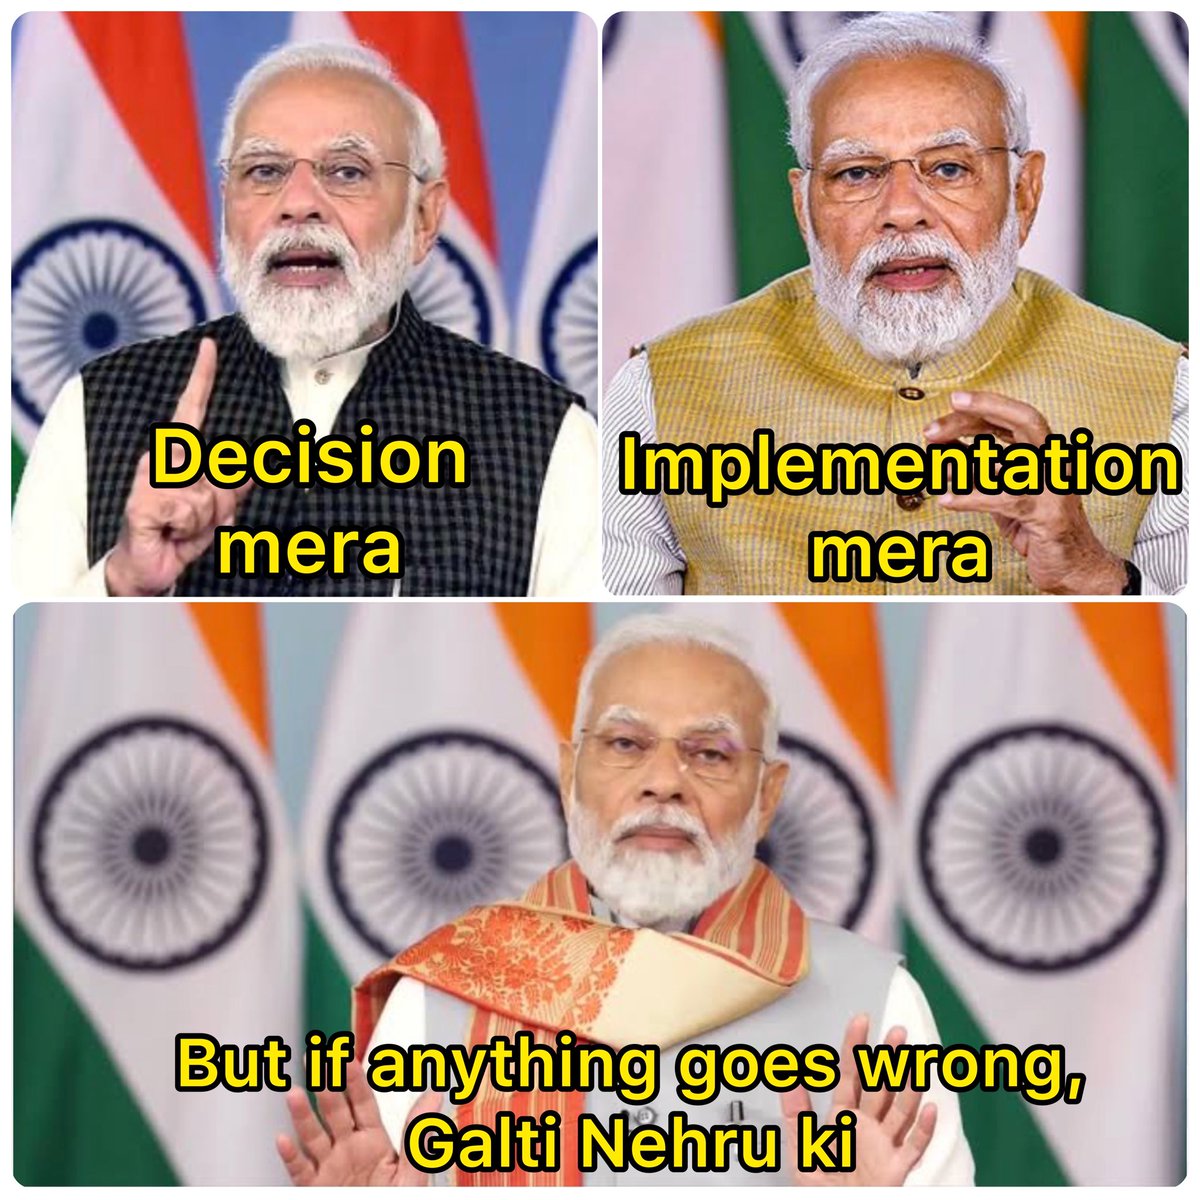 Modi mantra since 2014